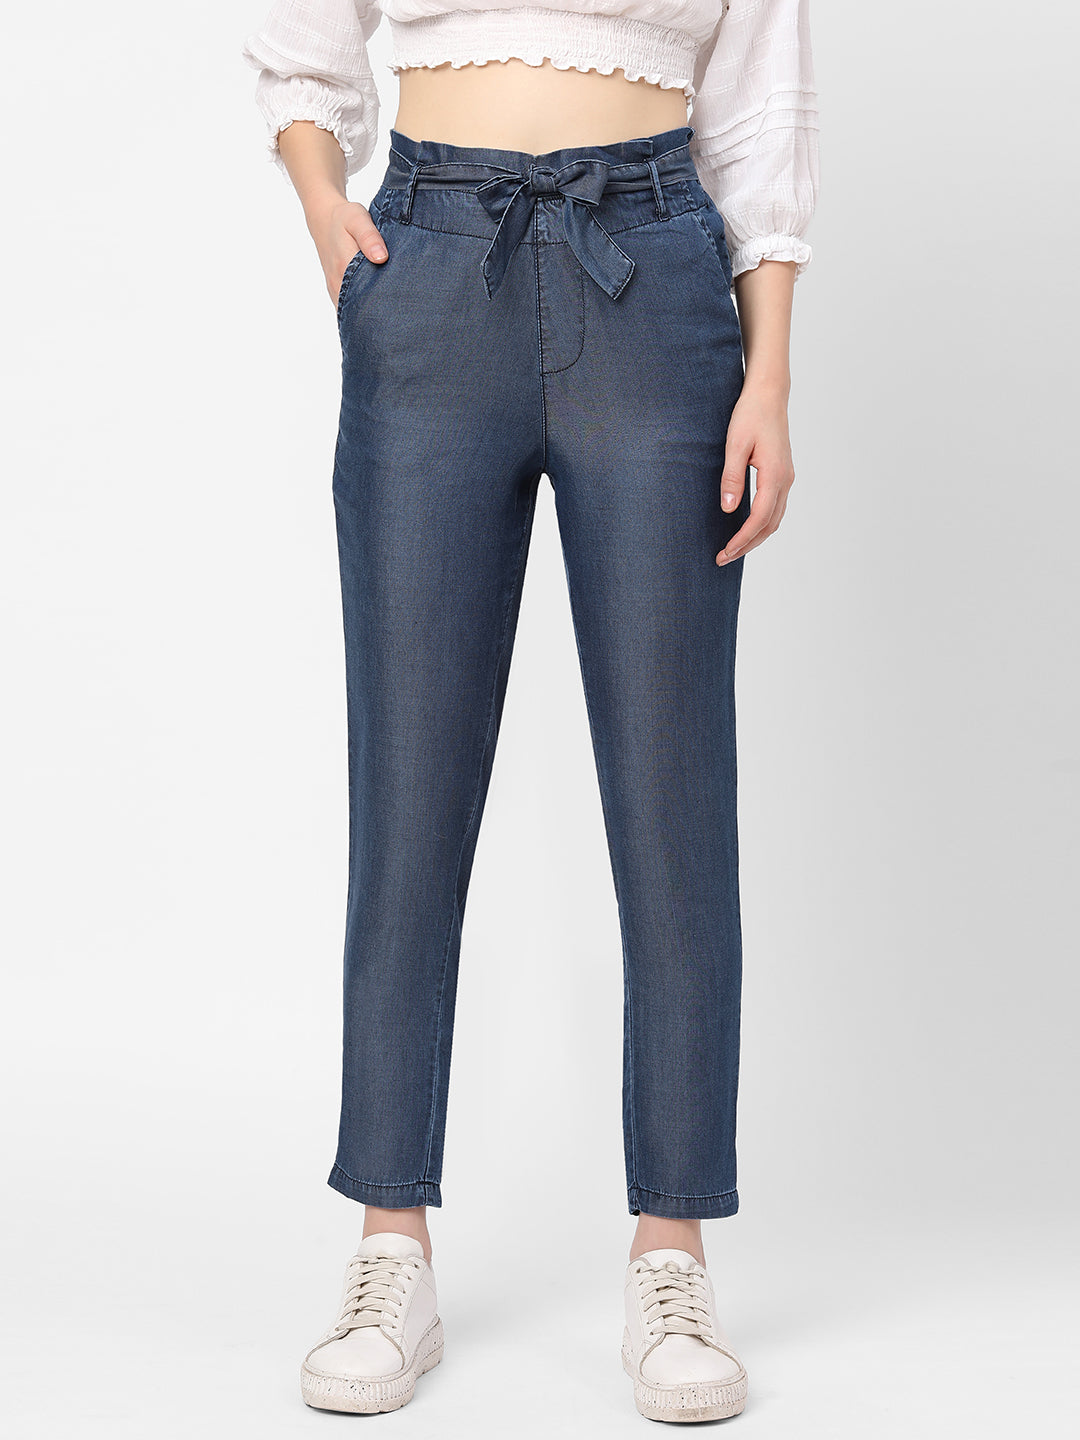 Jeans For Women High Waist Loose Spring Ankle Length Denim Harem Pants